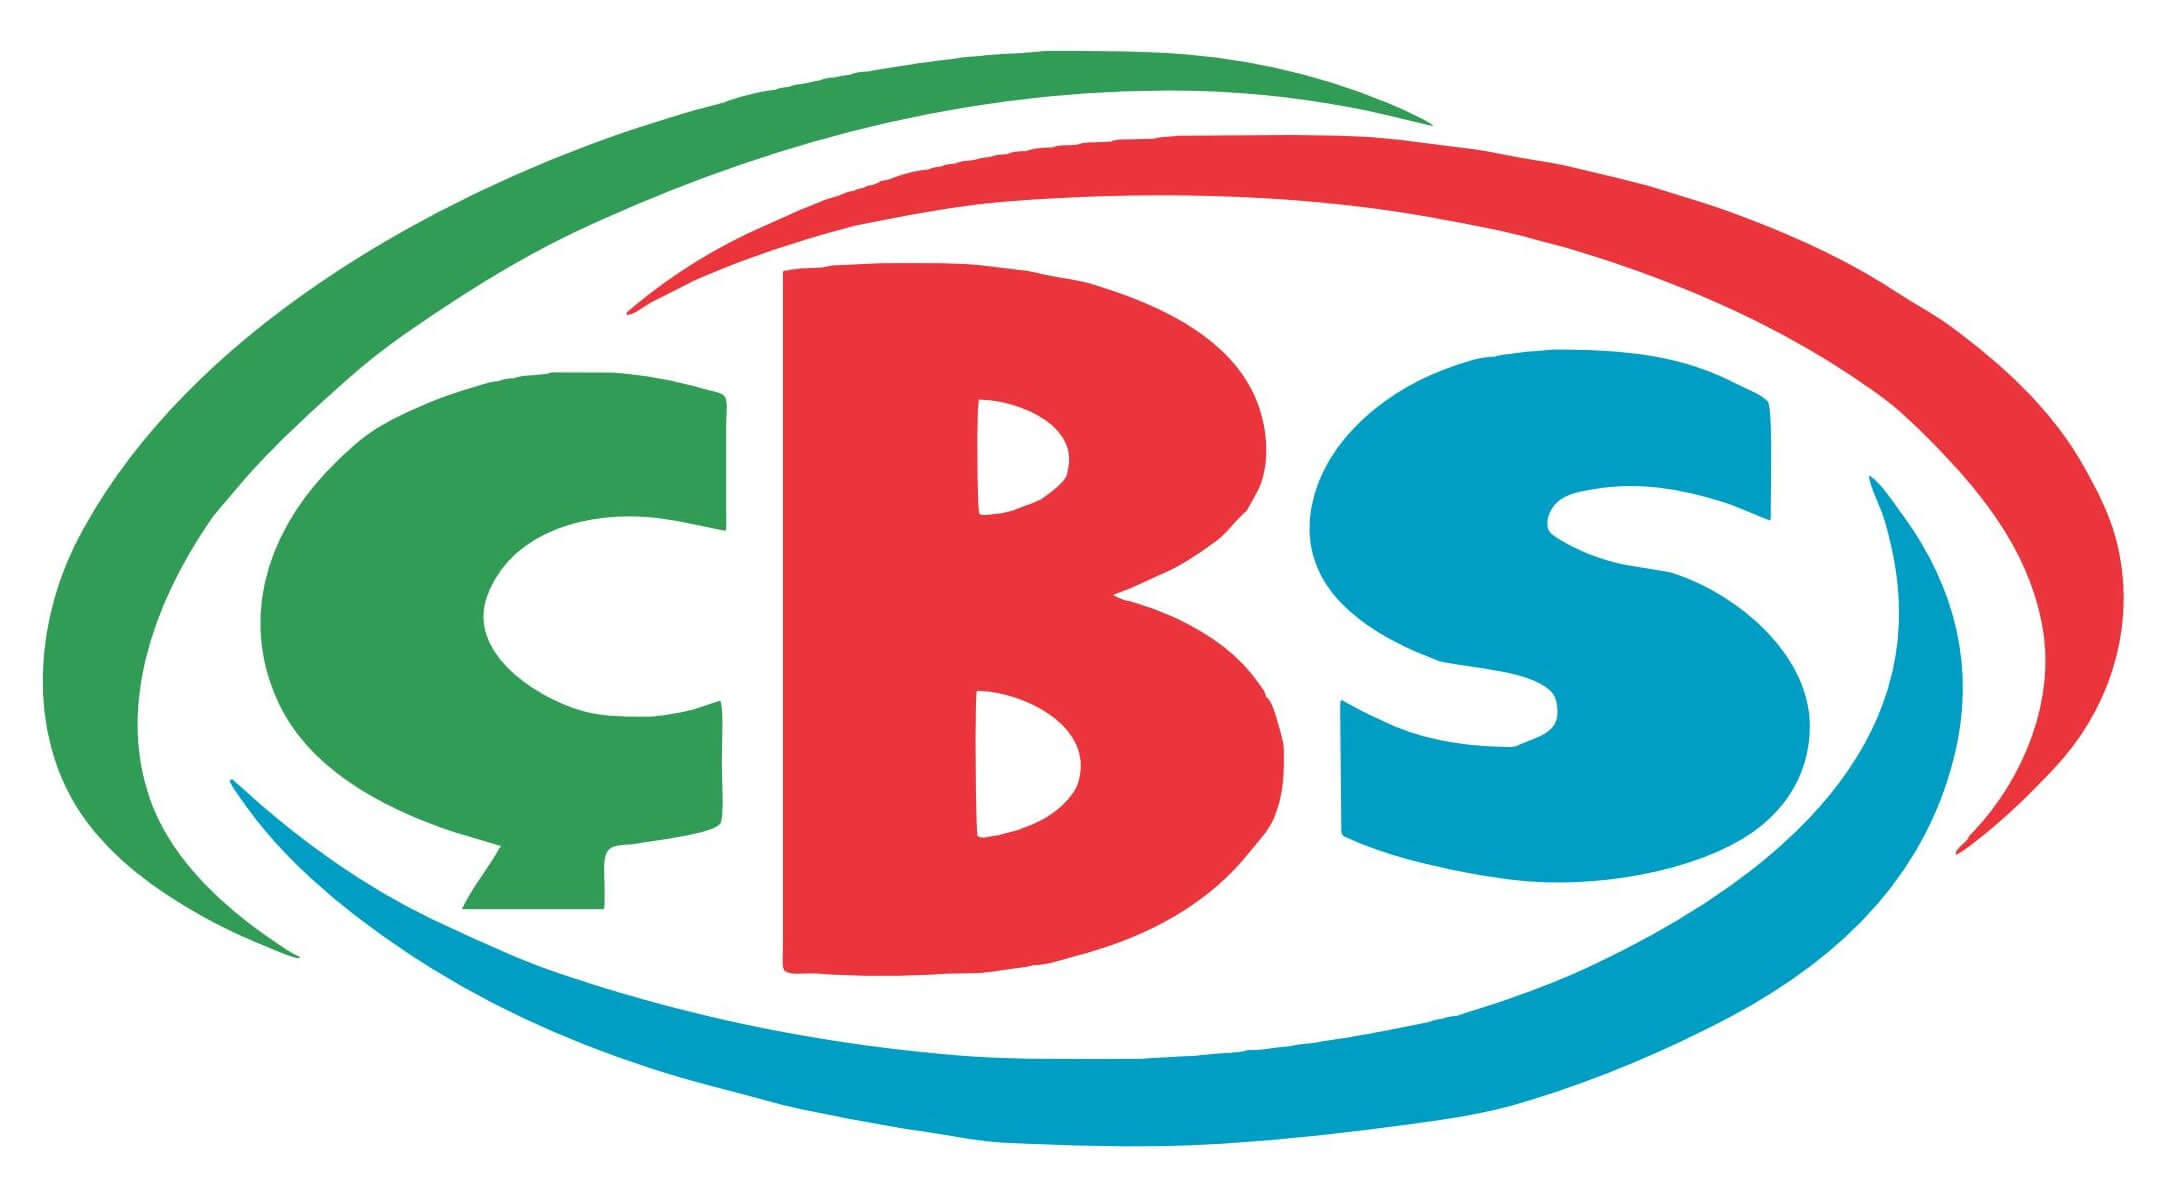 cbs boya logo